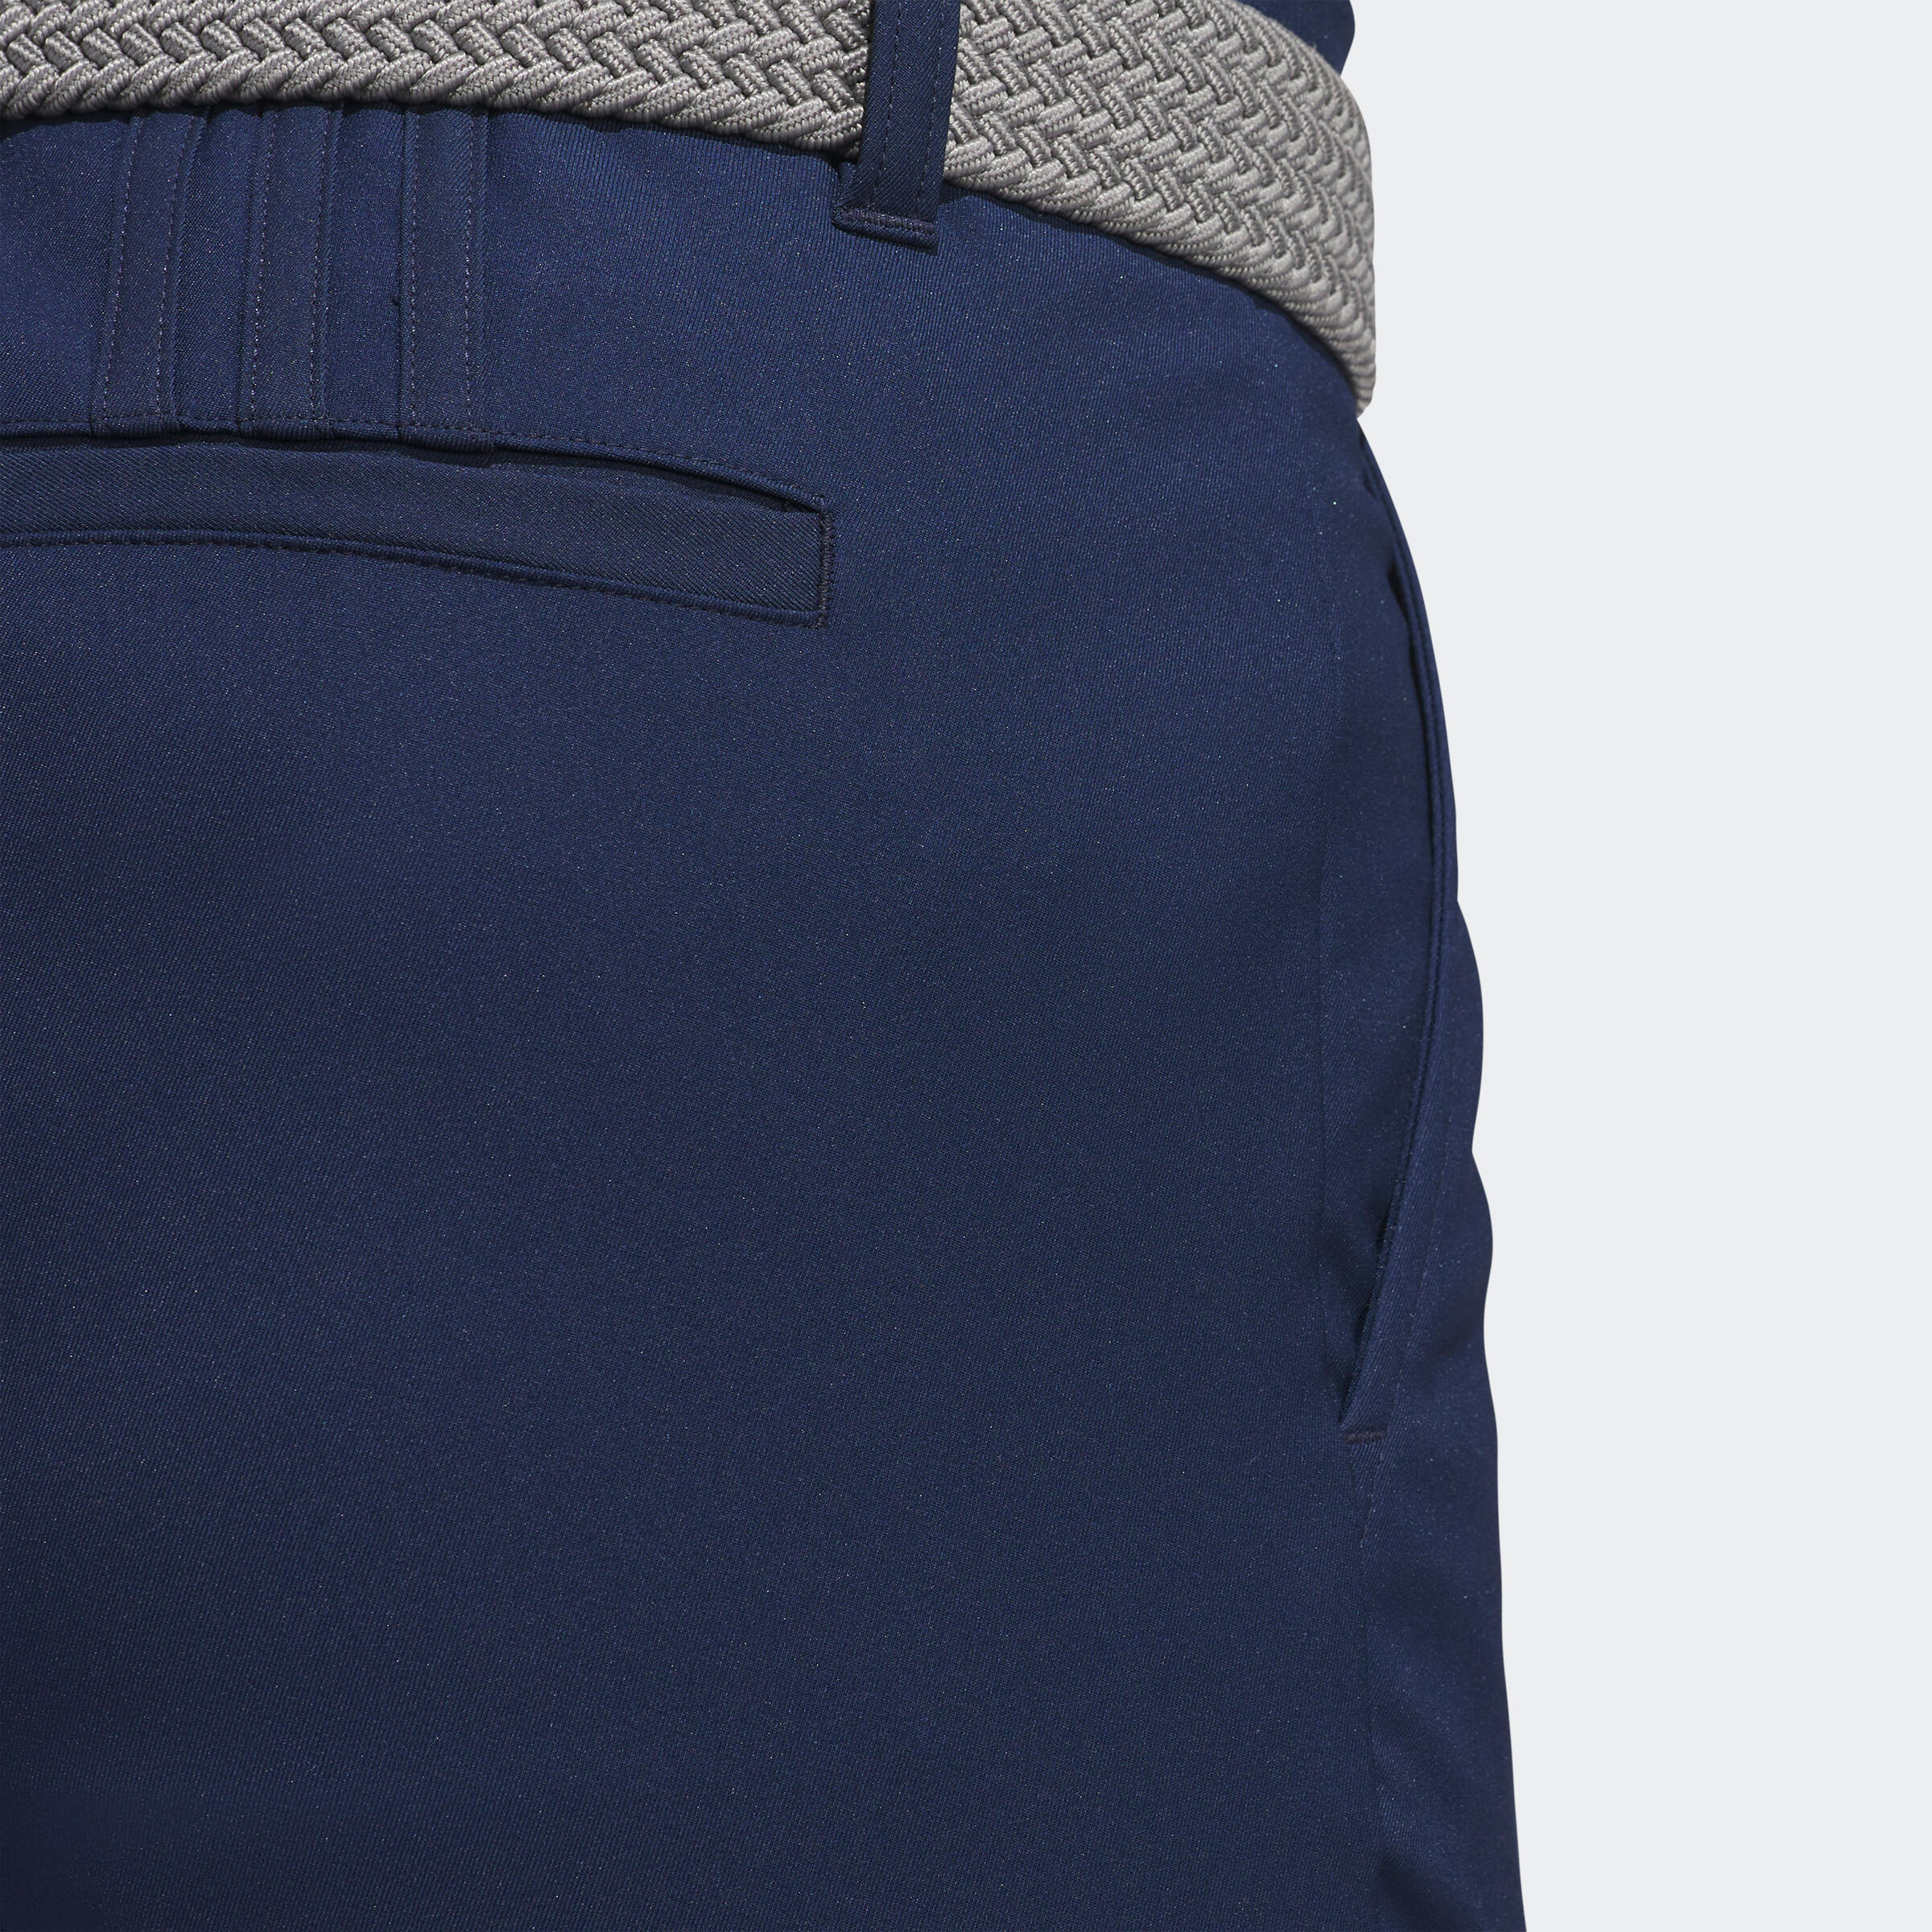 Men's golf trousers - Adidas navy blue 3/4